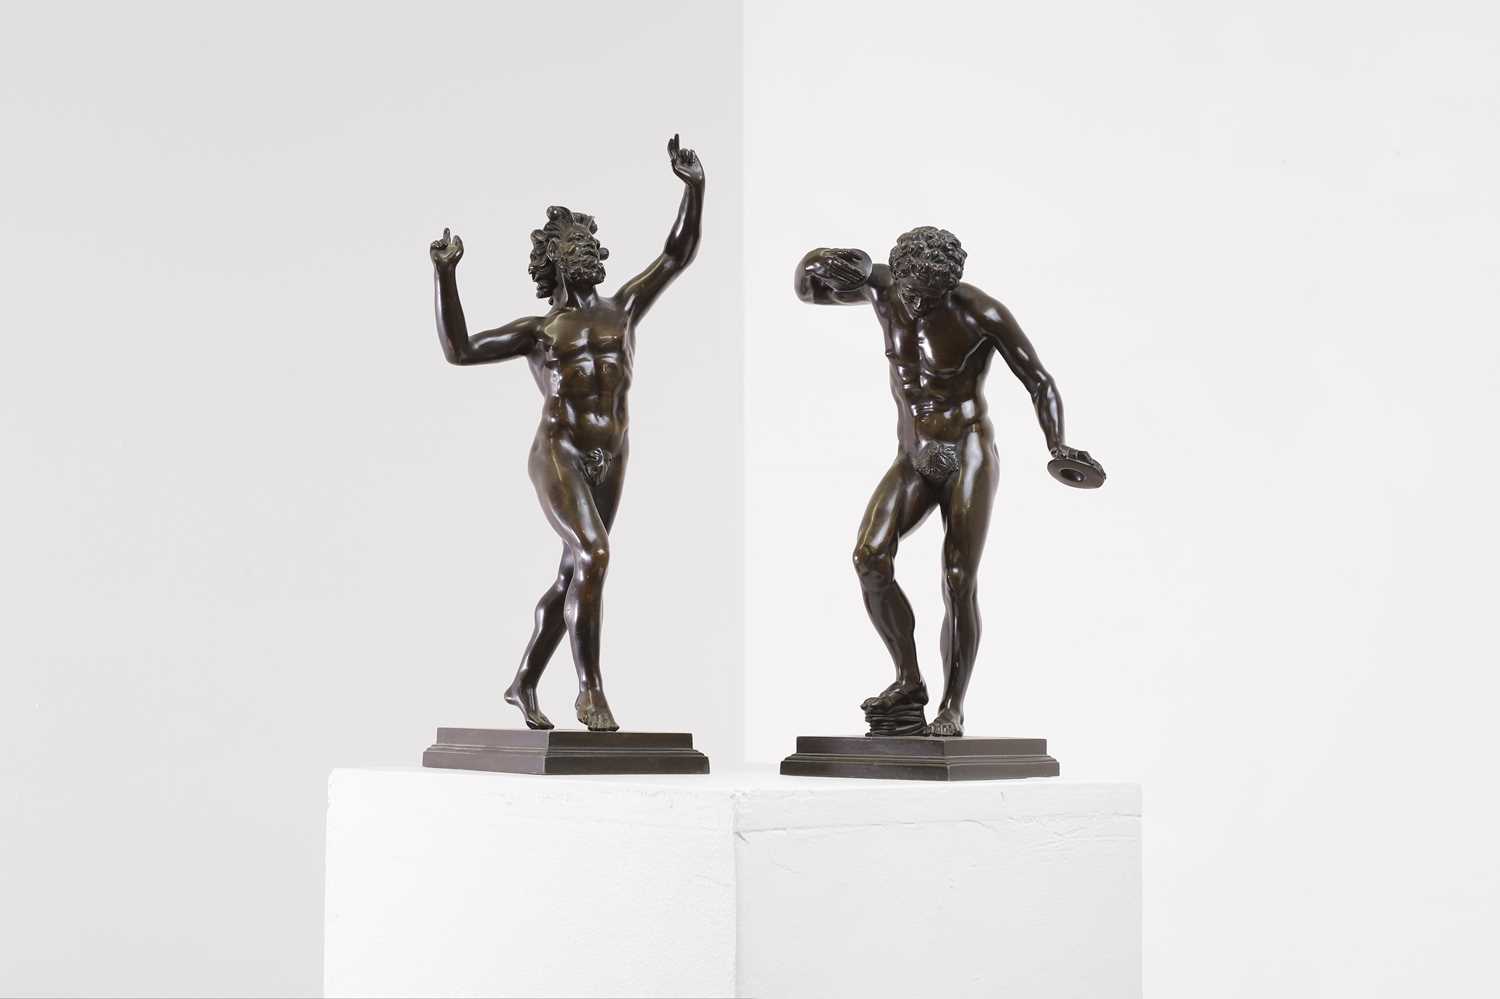 Lot A pair of grand tour bronze figures